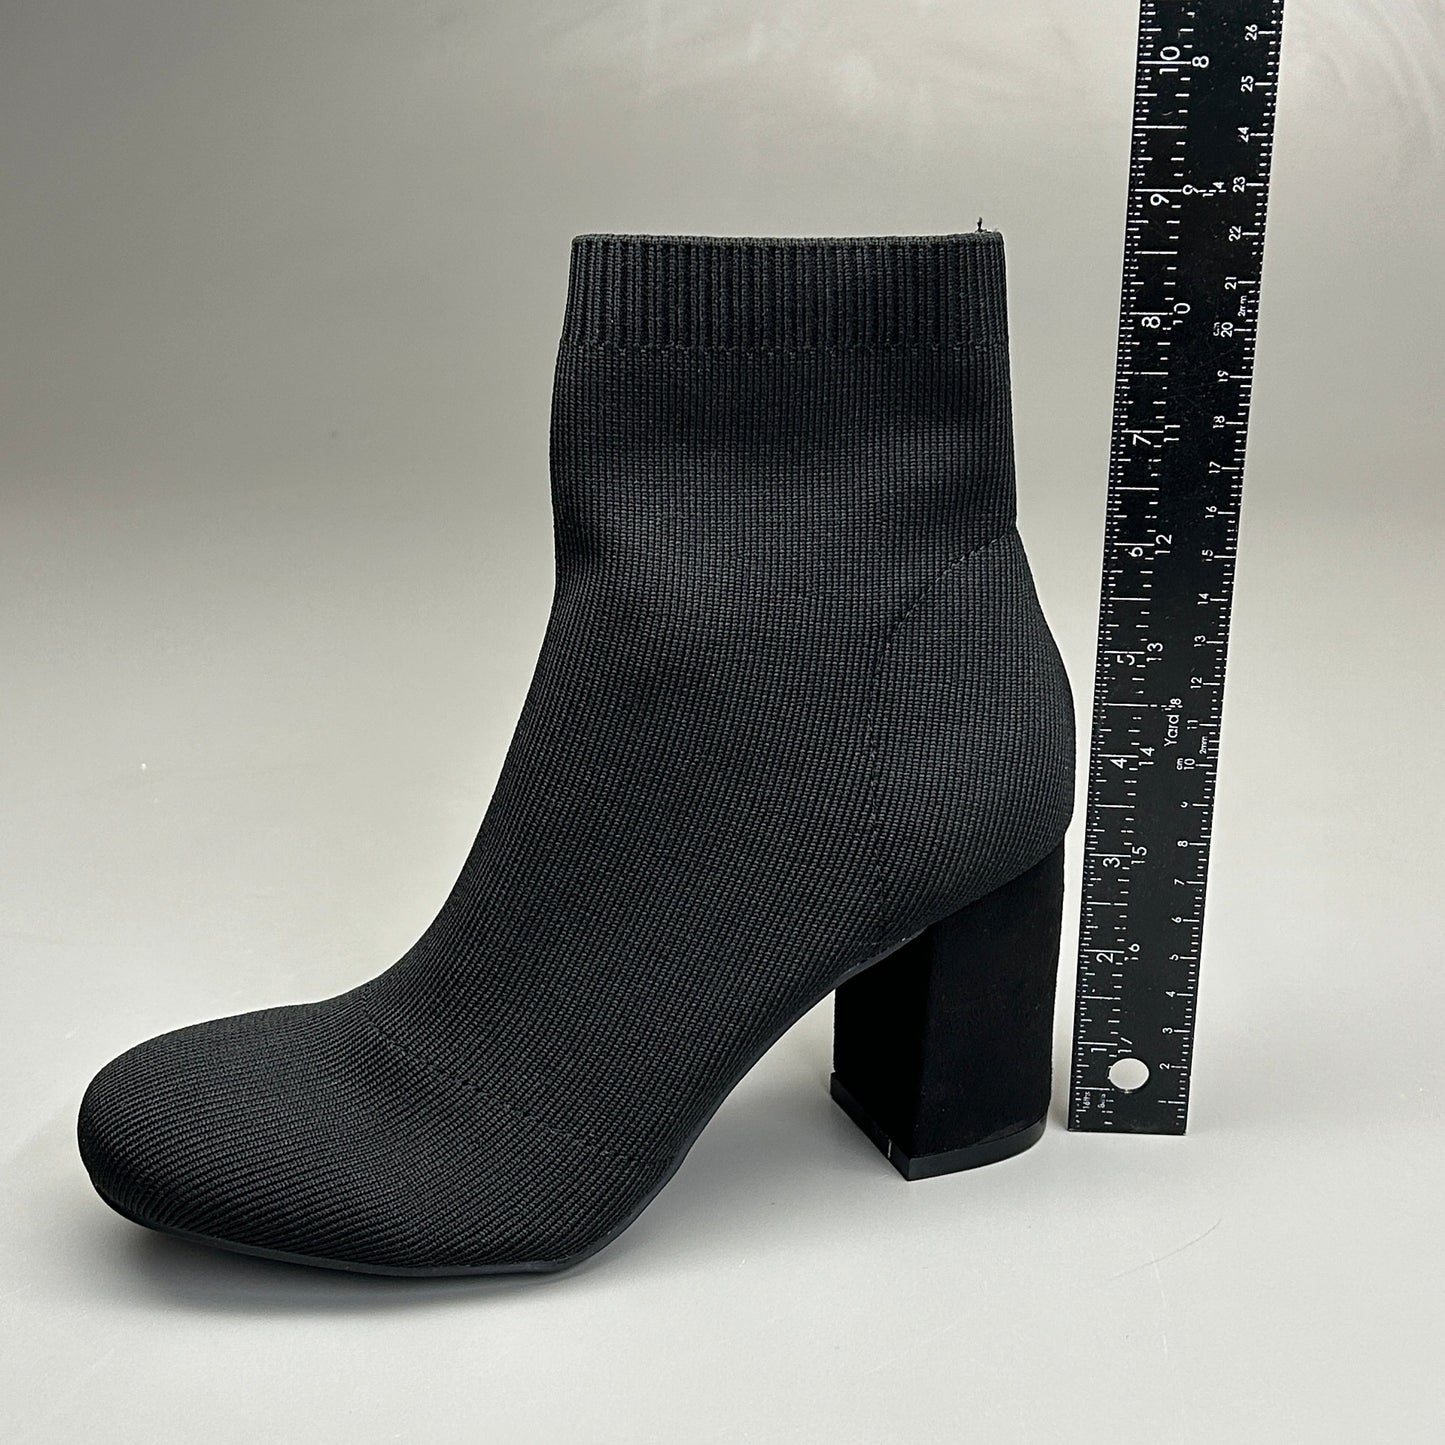 MIA Erika Fly Knit Booties Dress Boots Black 2” Heel Sz 12 GS7553115Y (New)